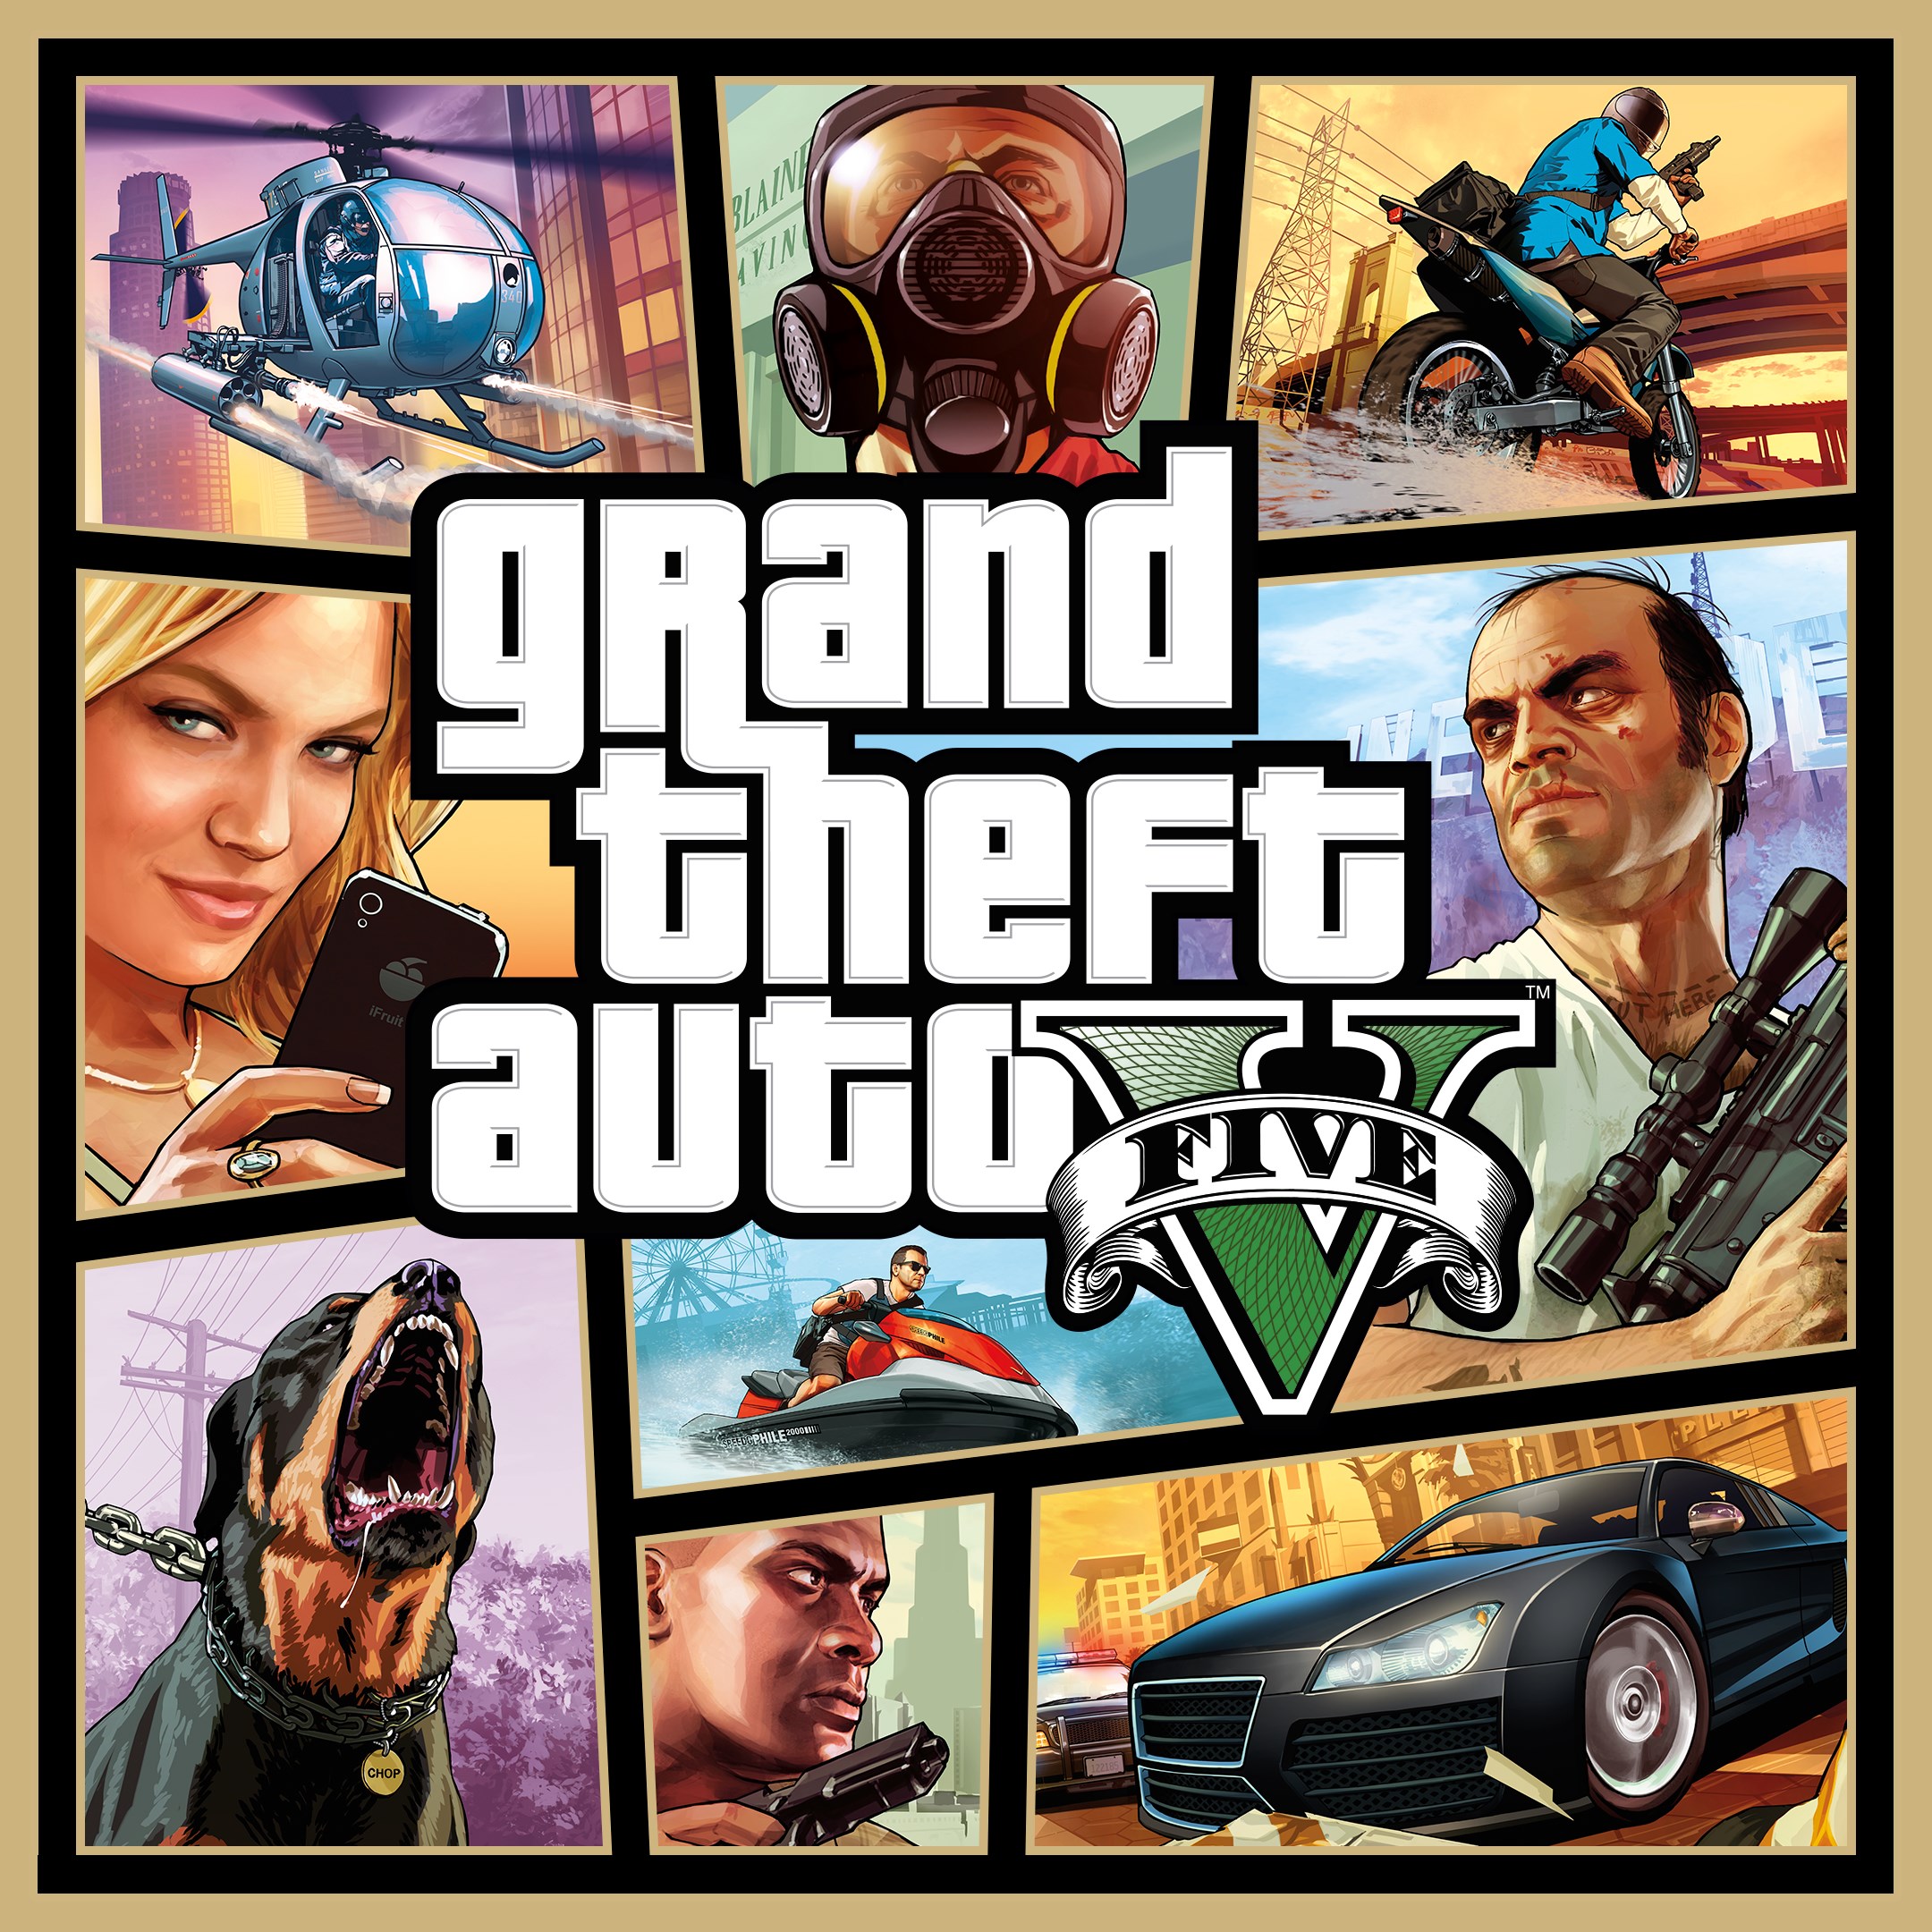 Buy Grand Theft Auto V ((Xbox Series X/S)) - XBOX Account - GLOBAL - Cheap  - !